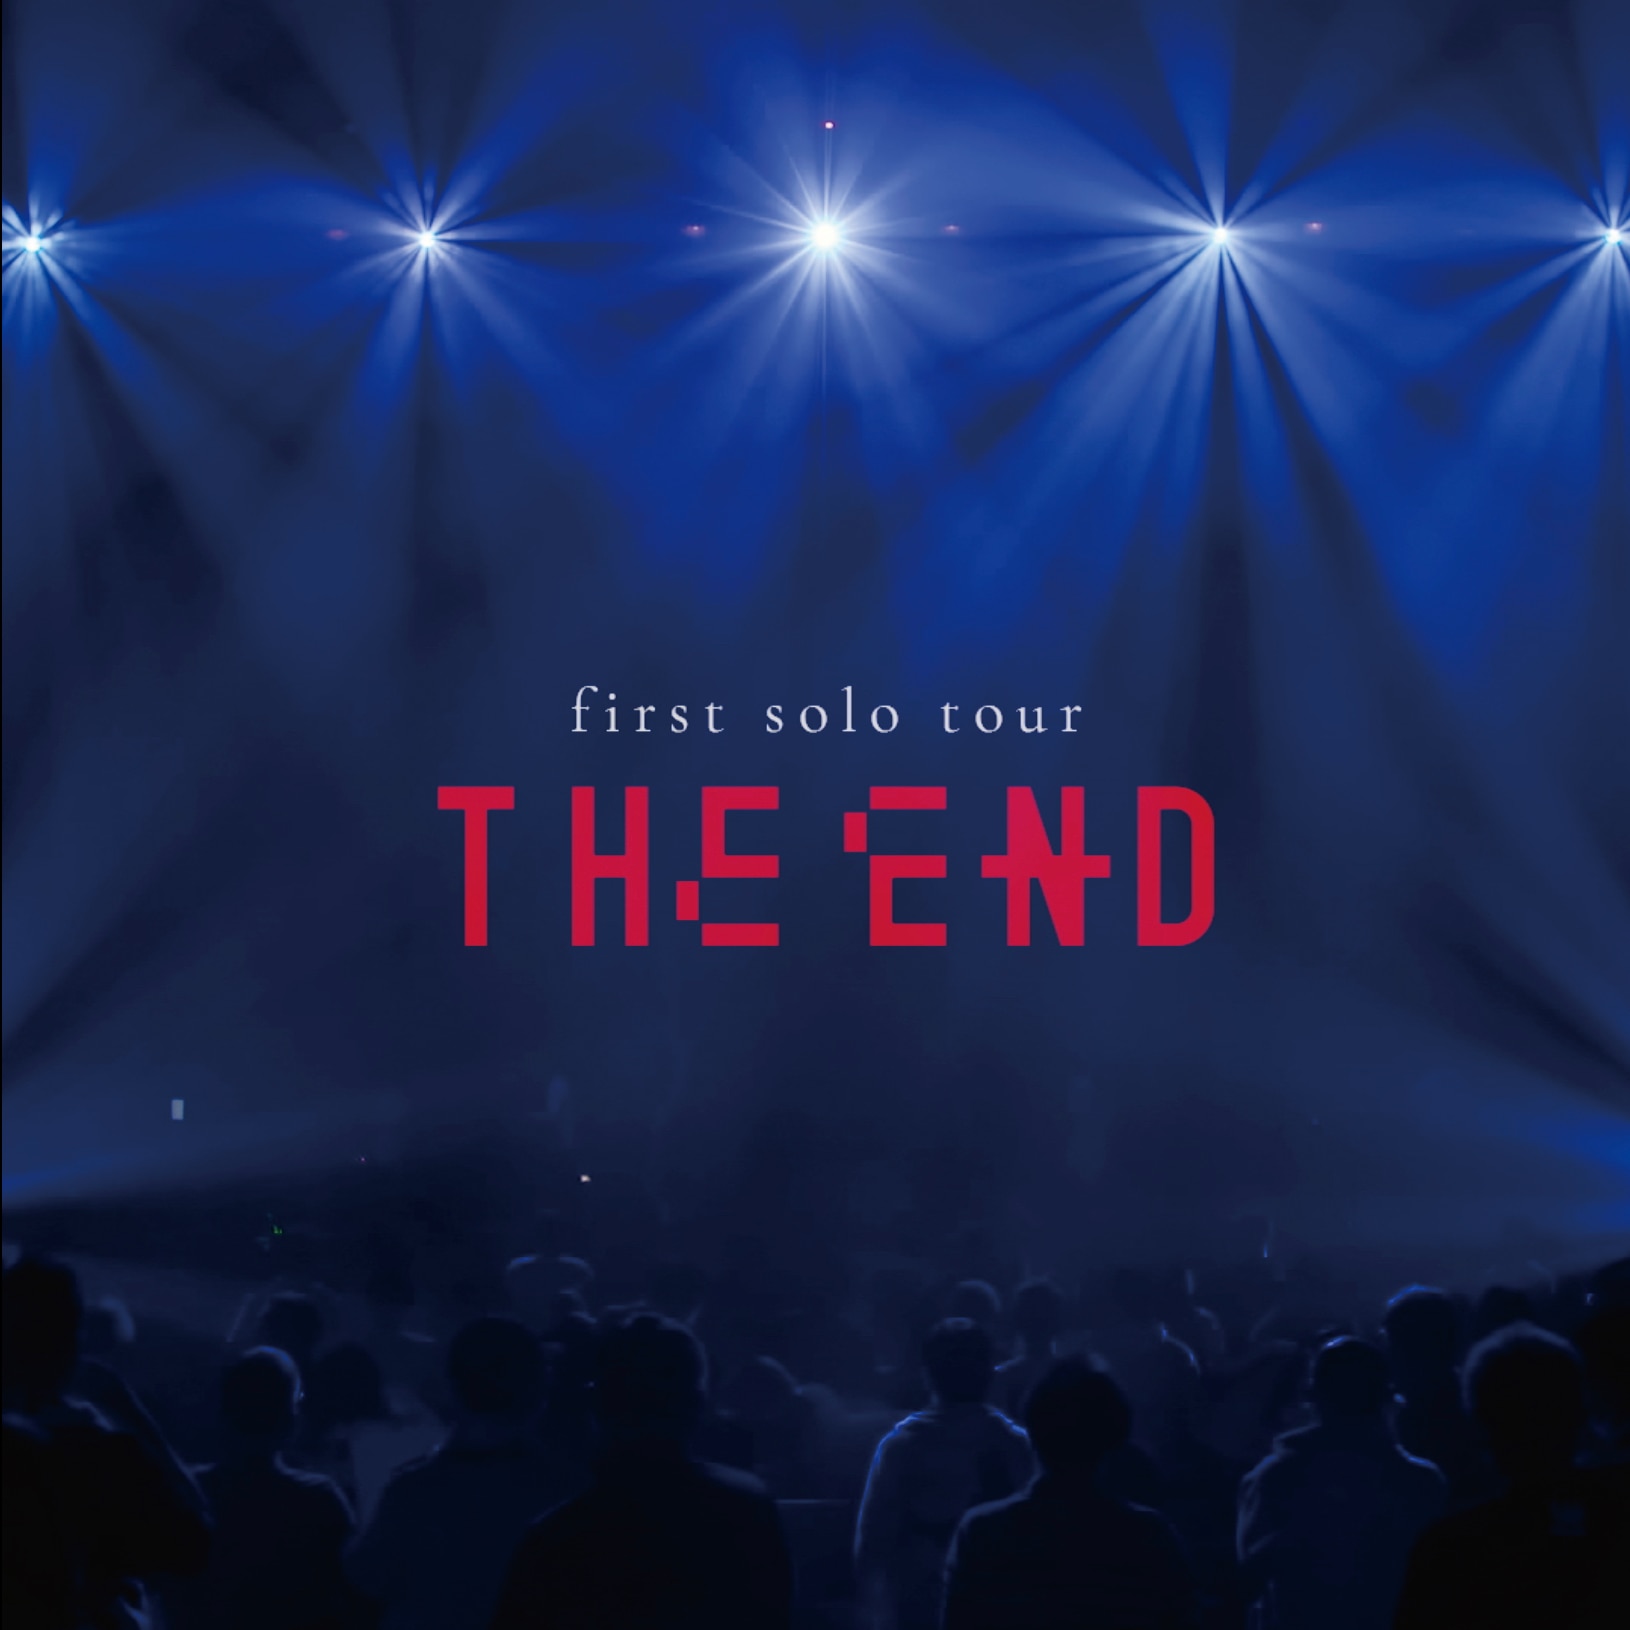 1st solo tour "THE END"